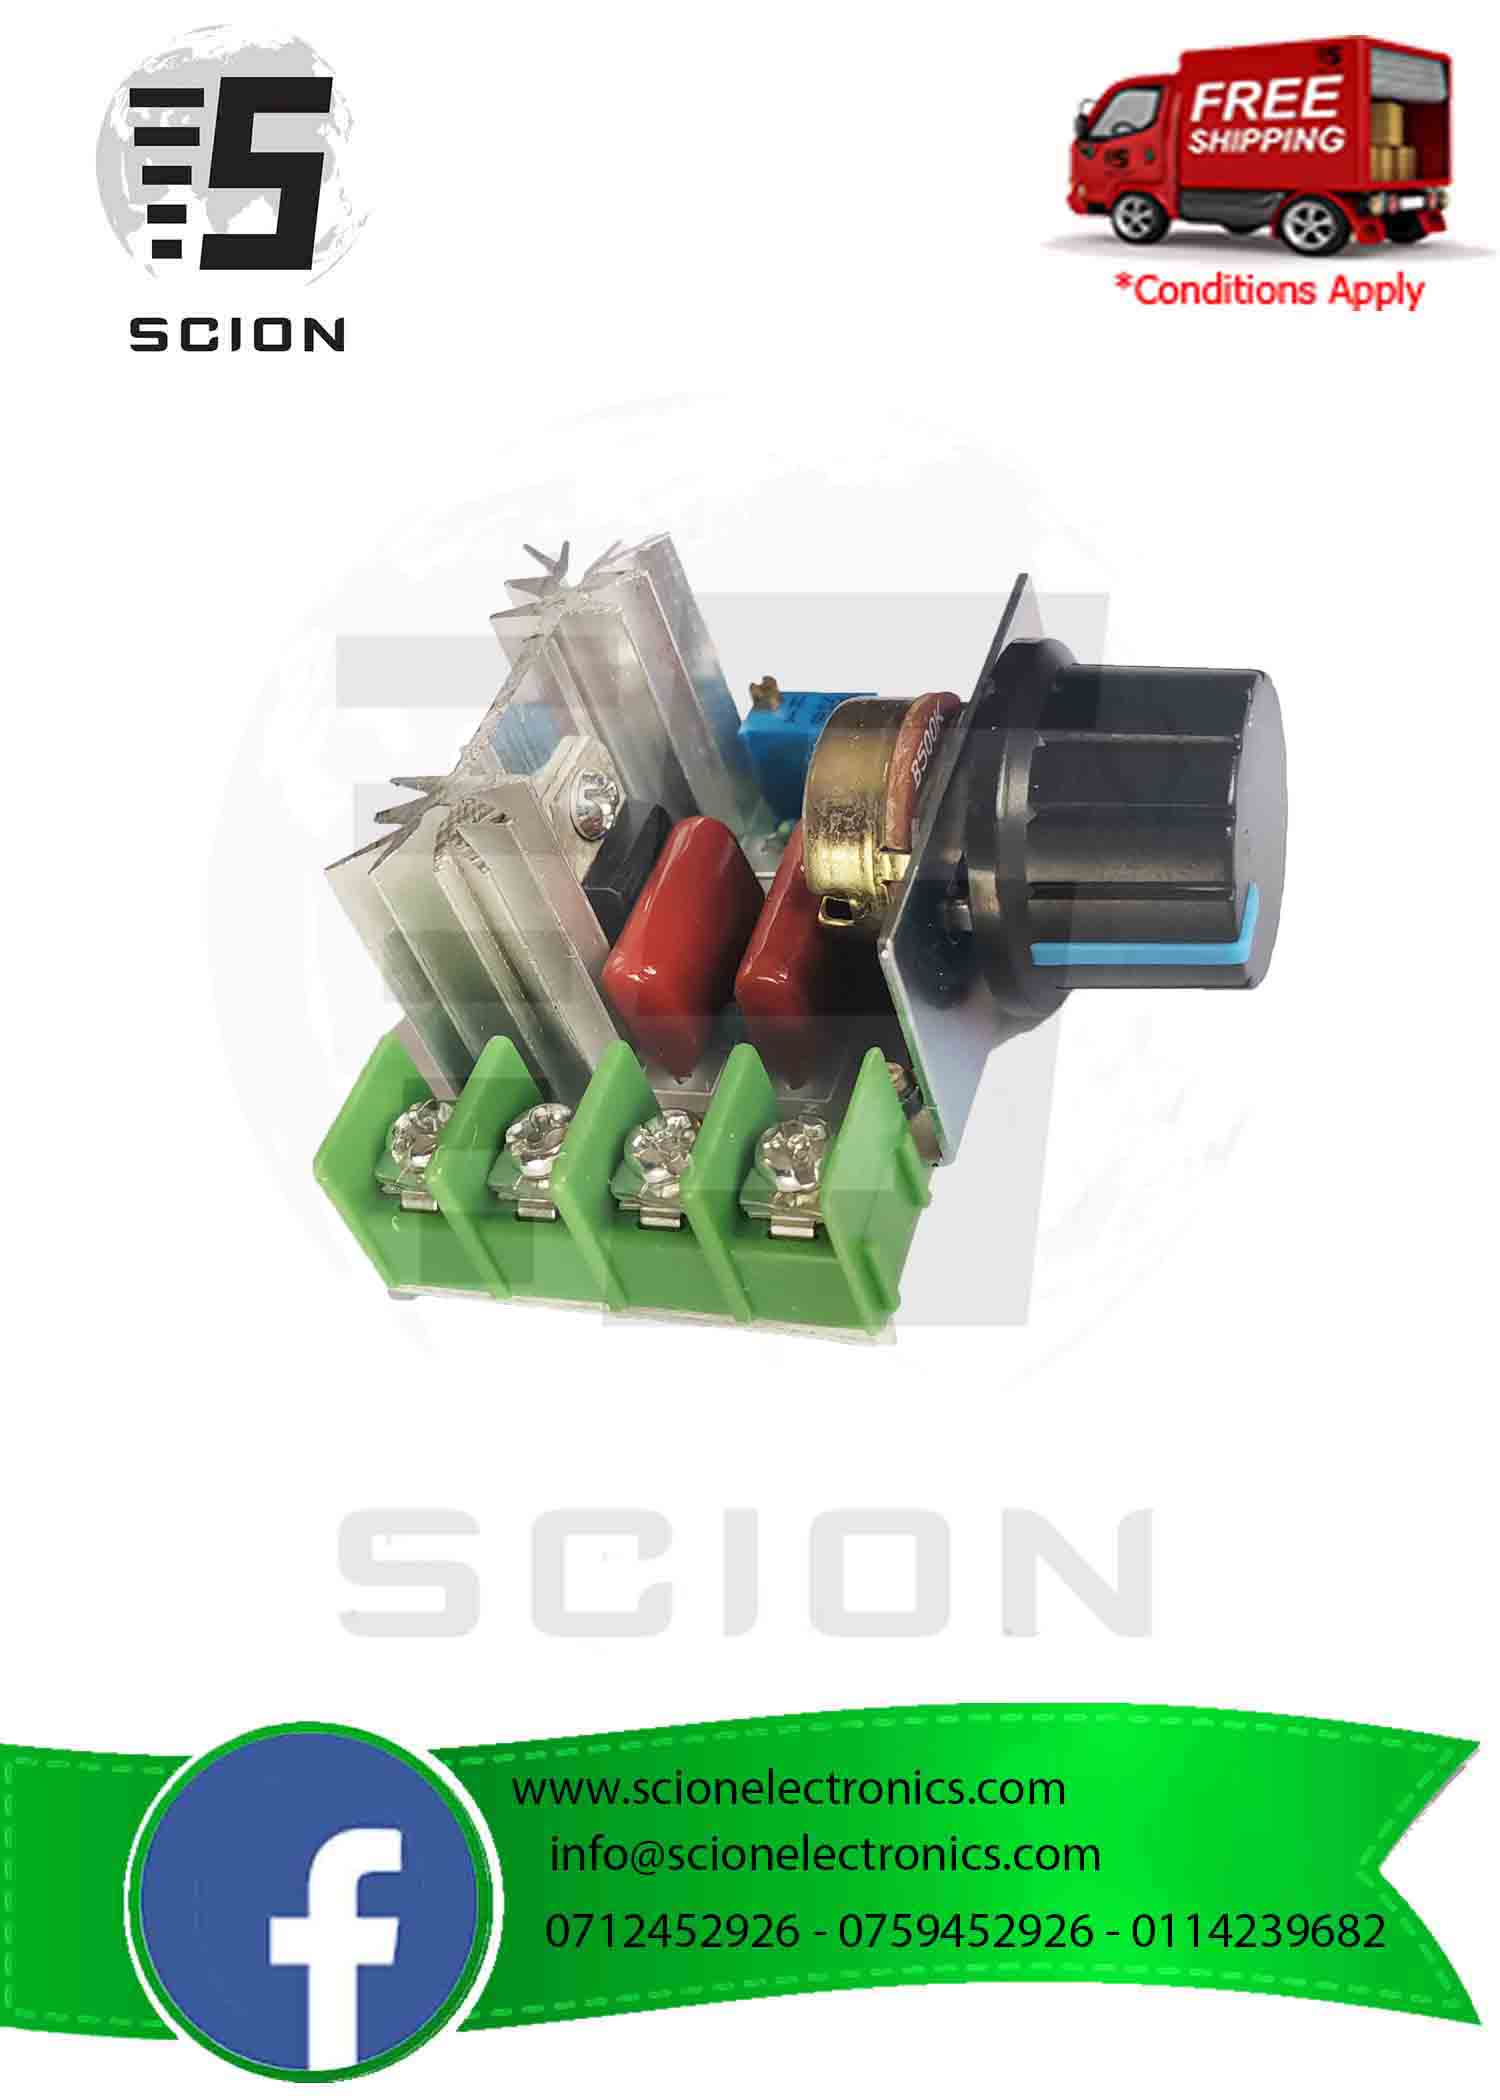 https://scionelectronics.com/wp-content/uploads/2020/06/2000W-PWM-AC-Motor-Speed-%E2%80%8B-Control-Module-Dimmer-50-220-V-Adjustable-Voltage-Controller-Scion-Electronics-Sri-Lanka.jpg